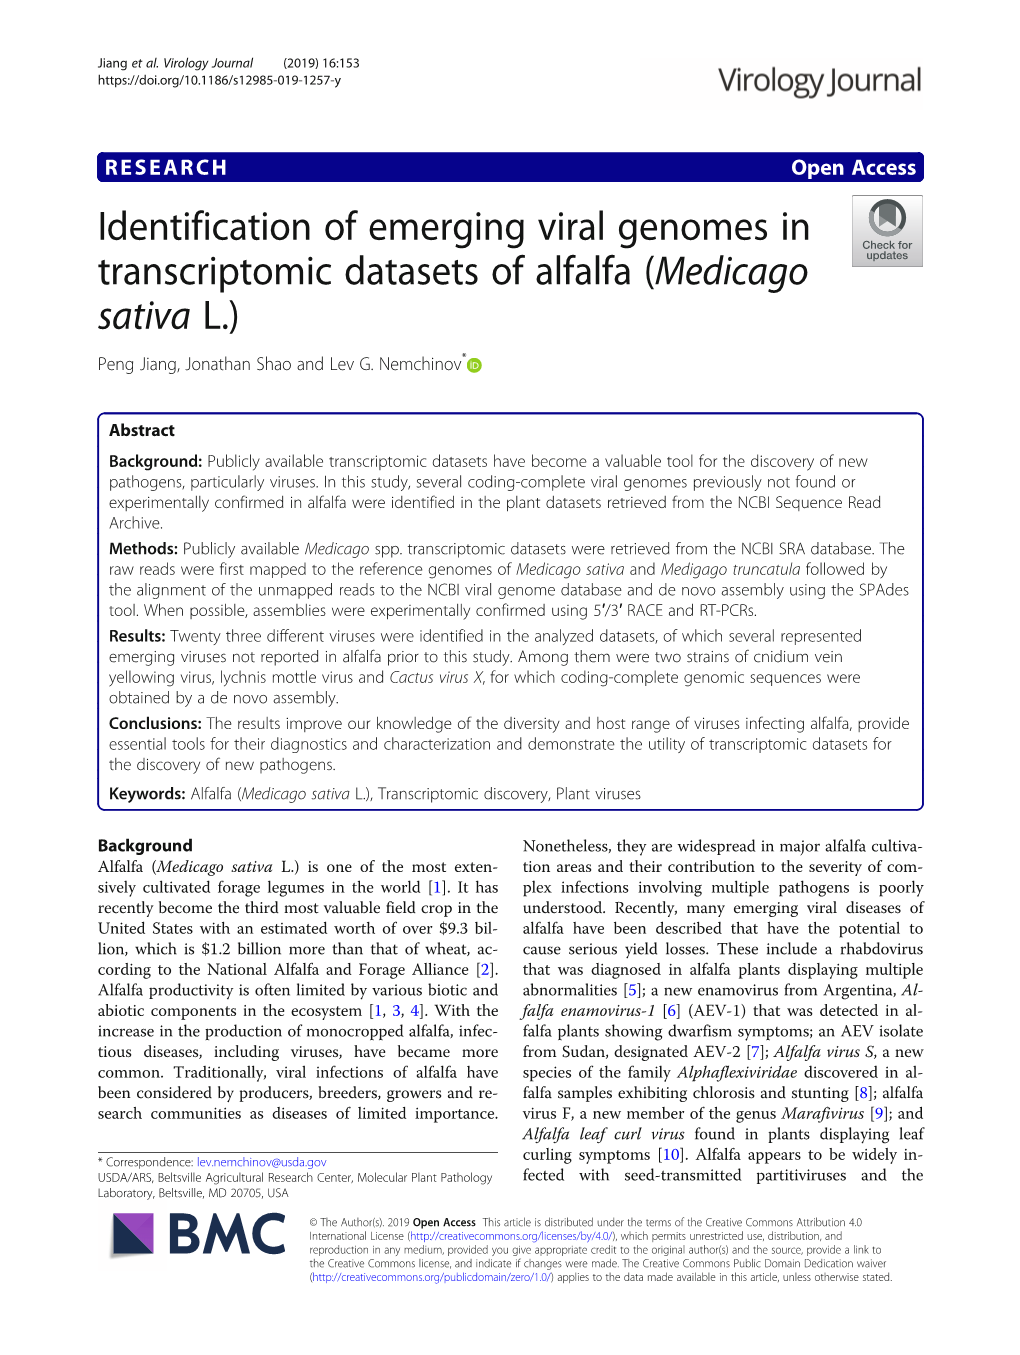 Identification of Emerging Viral Genomes in Transcriptomic Datasets of Alfalfa (Medicago Sativa L.) Peng Jiang, Jonathan Shao and Lev G